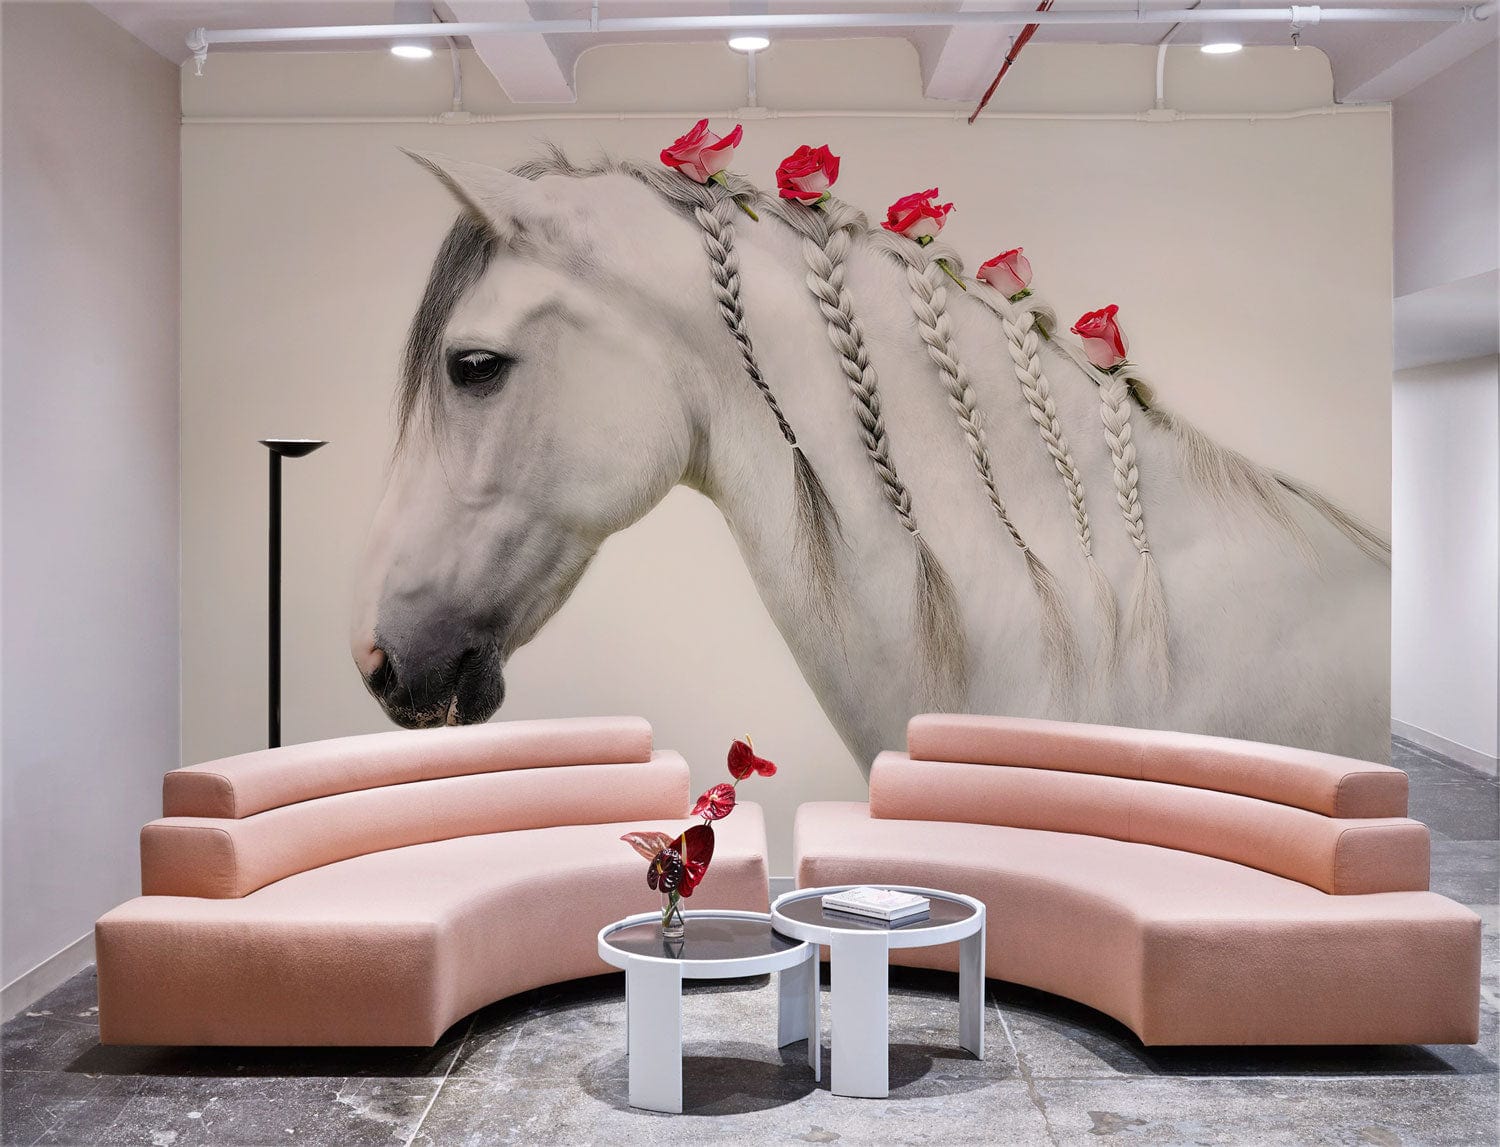  horse animal  wallpaper mural custom design